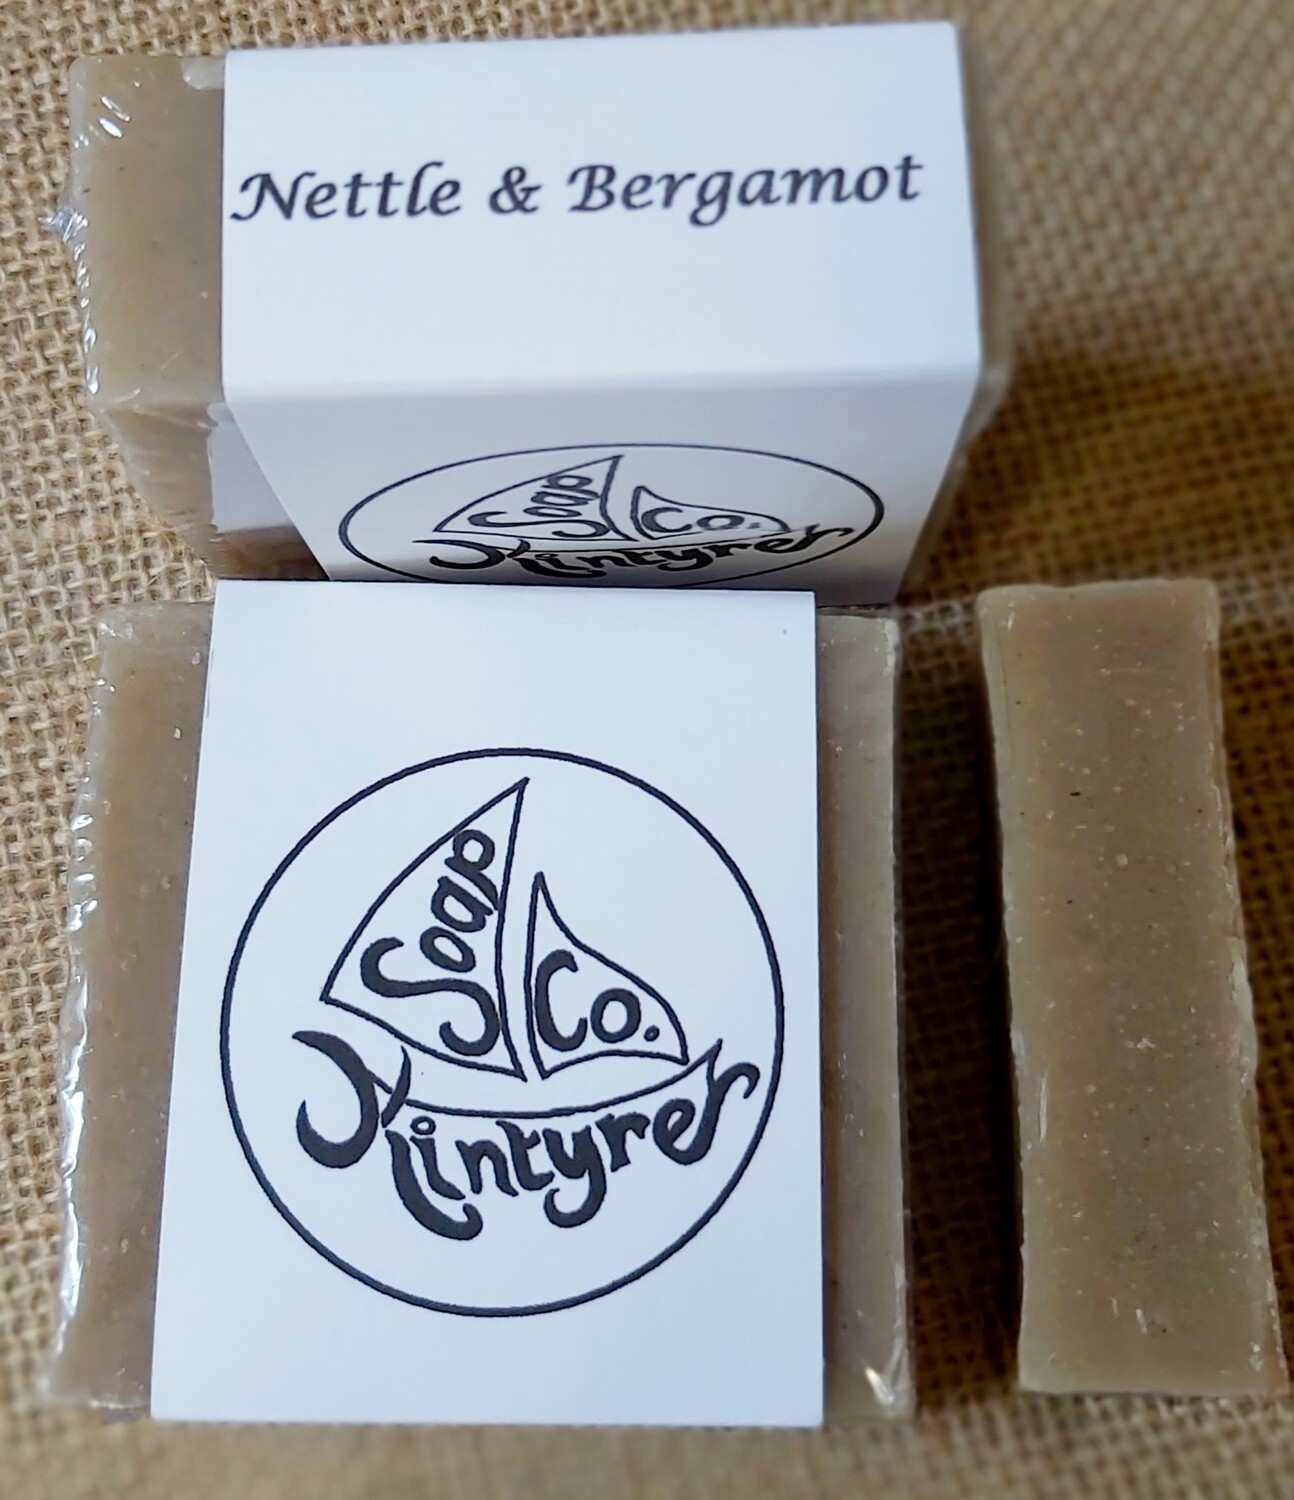 'Nettle & Bergamot' cold processed soap